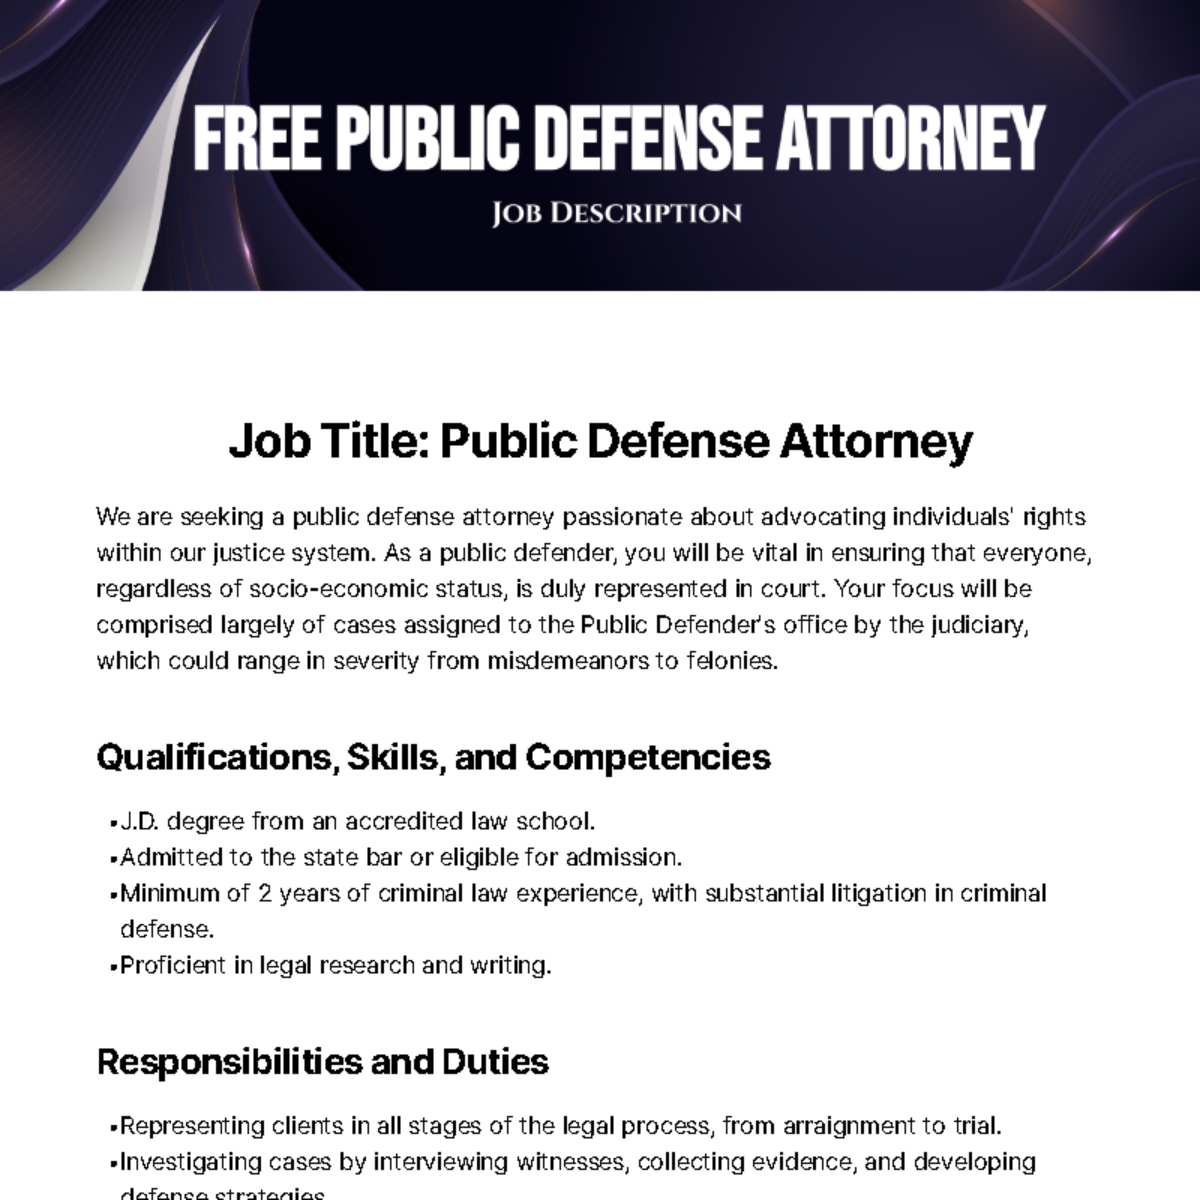 Free Public Defense Attorney Job Description Template